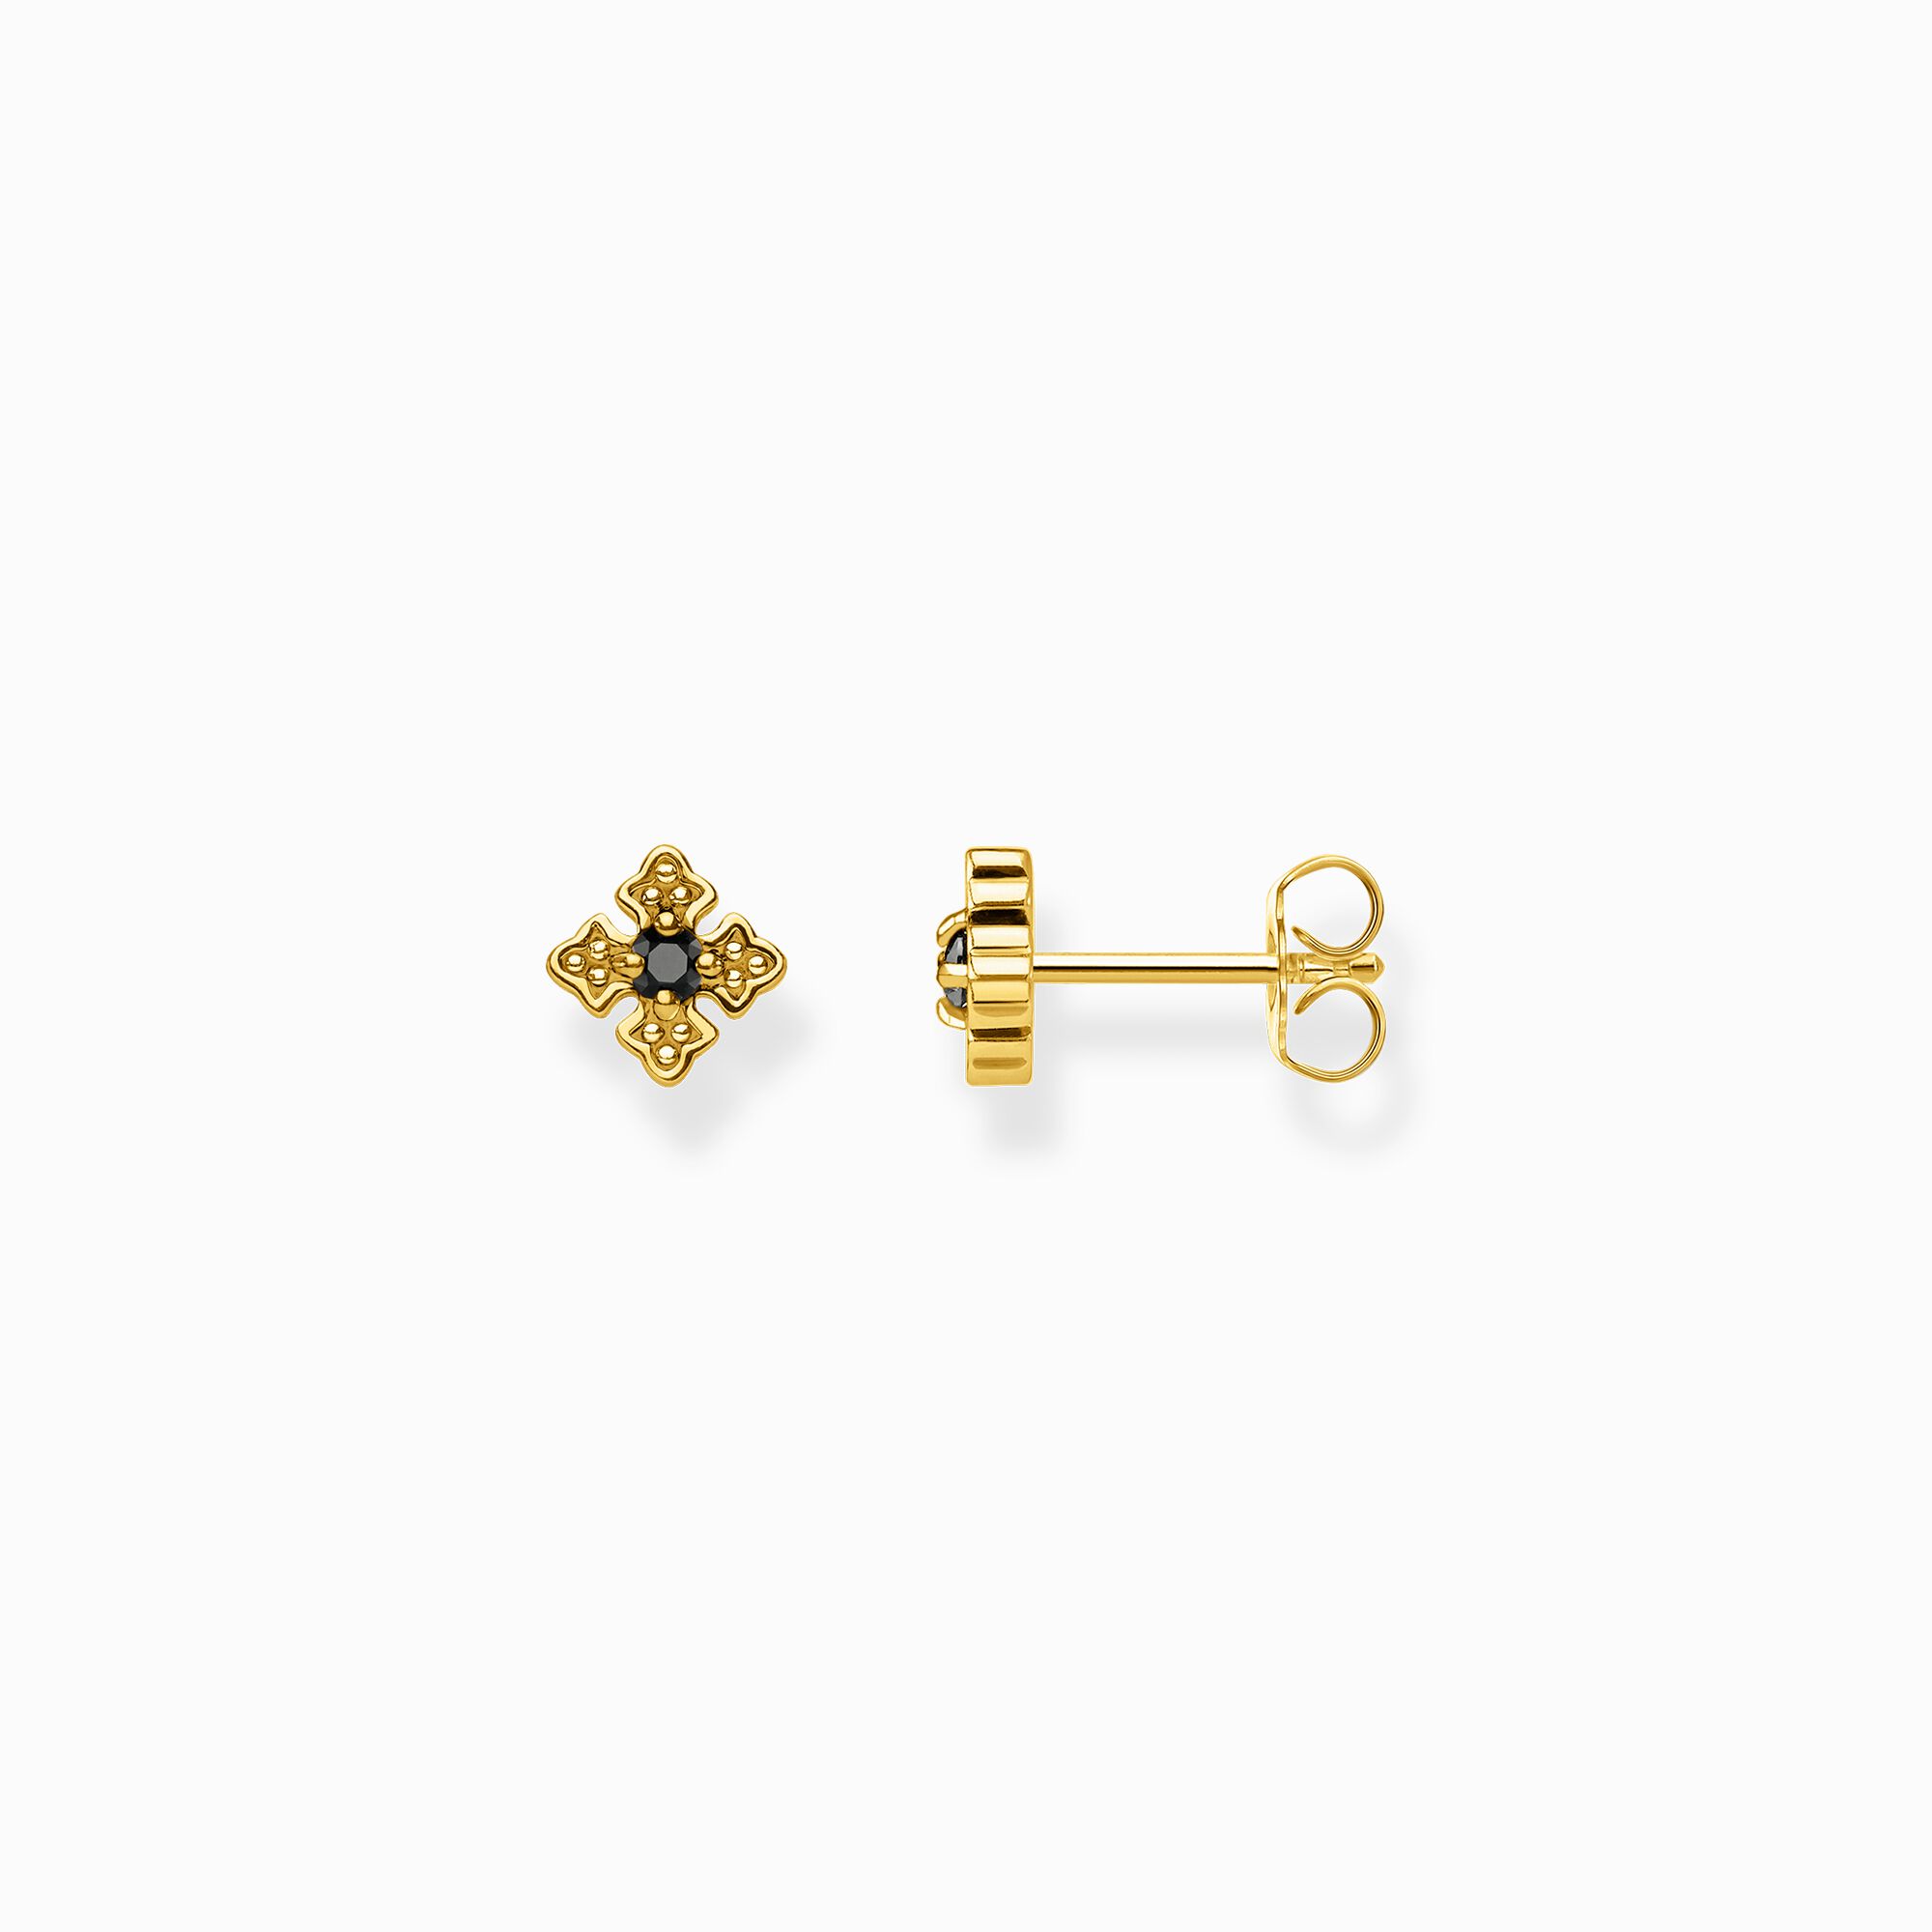 Ear studs in modern cross design | THOMAS SABO